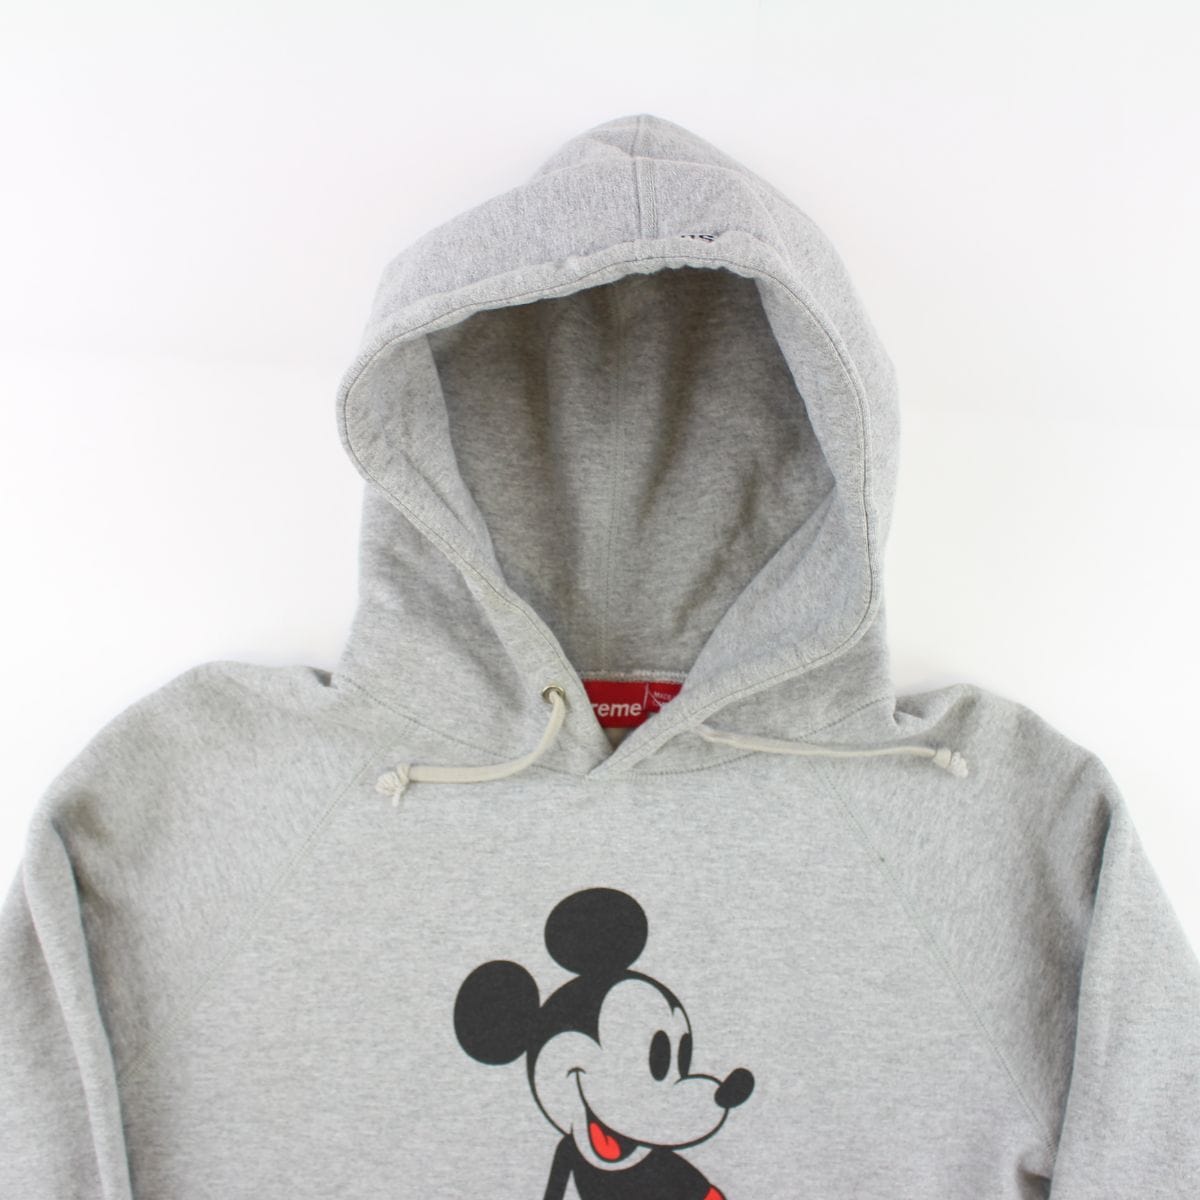 Supreme x Disney Mickey Mouse Hoodie Grey - SaruGeneral